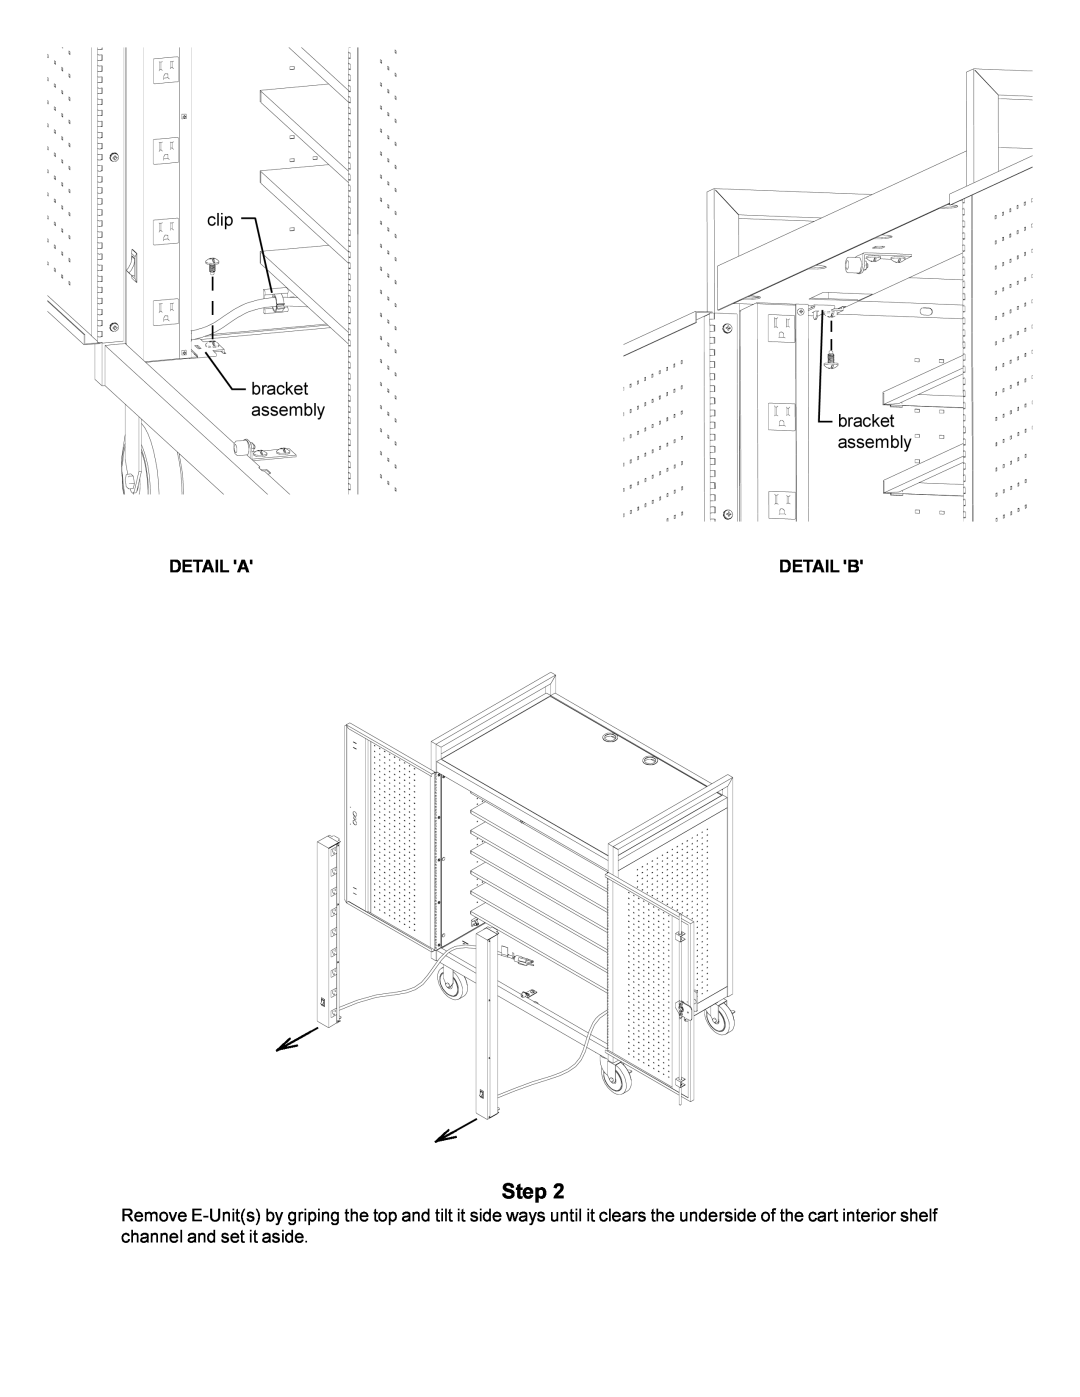 Bretford lap18eulba manual Step, clip bracket assembly bracket assembly, Detail A, Detail B 